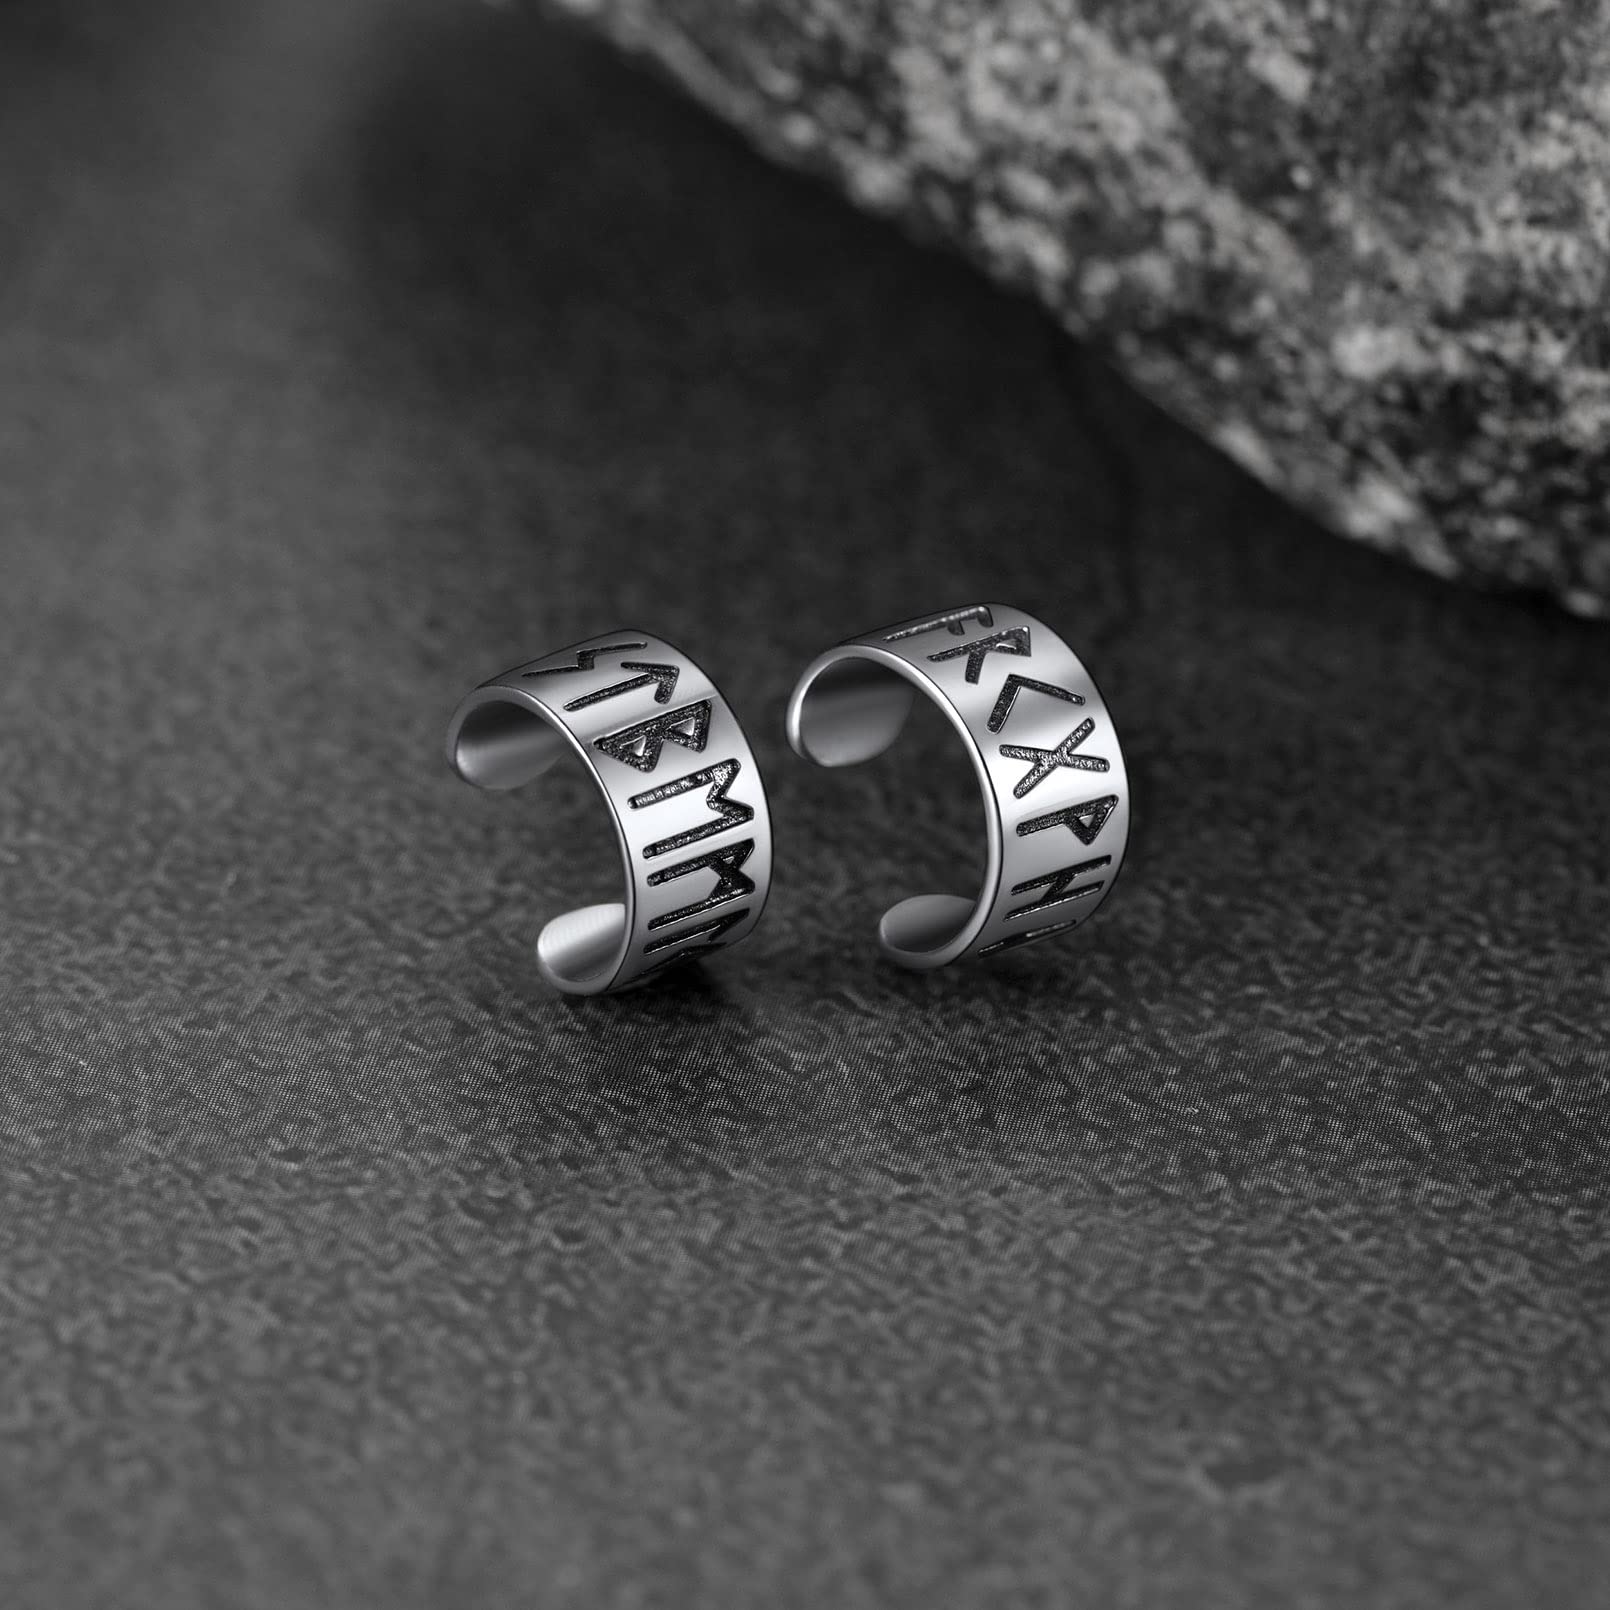 FaithHeart Sterling Silver Viking Runes Earrings for Women Men Black Onyx Earrings with Delicate Gift Packaging